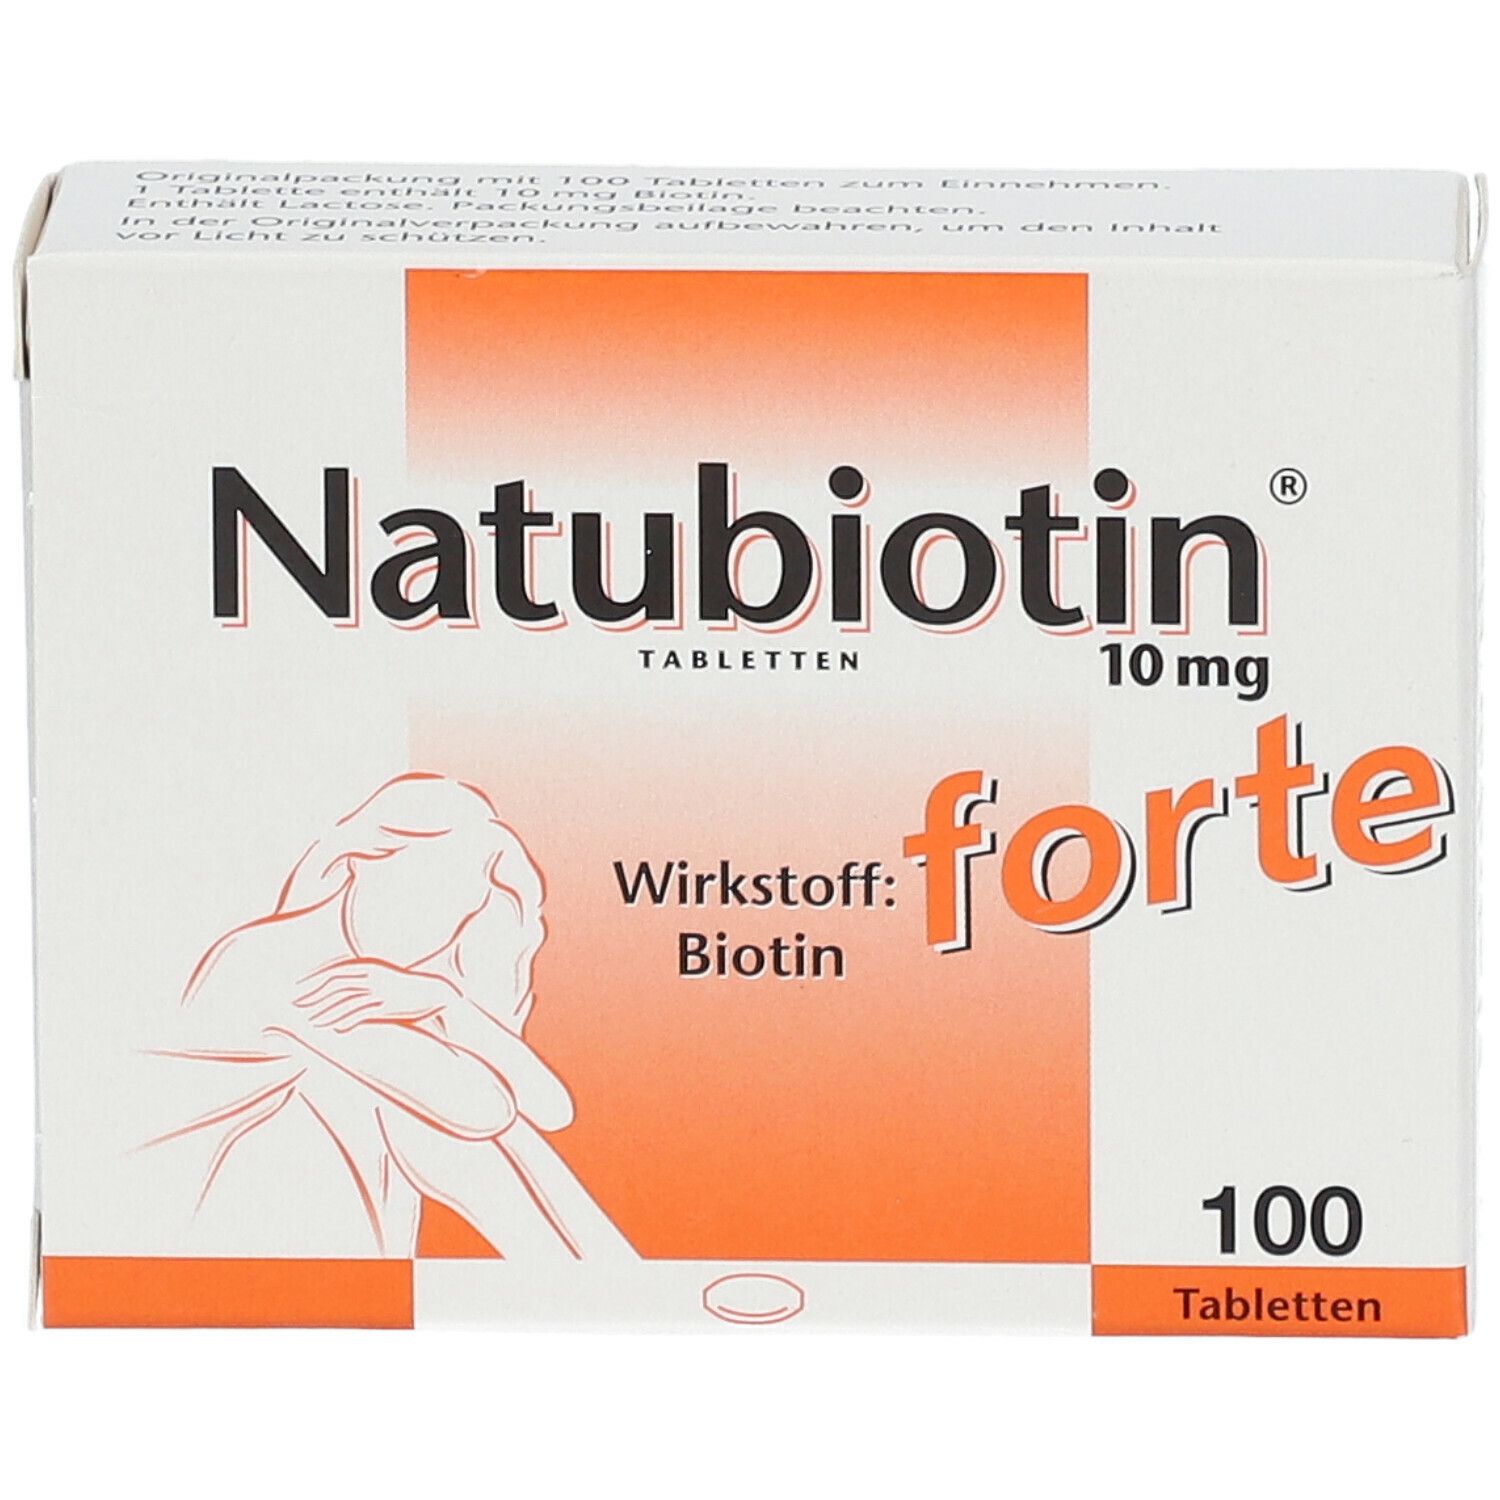 Natubiotin® 10 mg forte